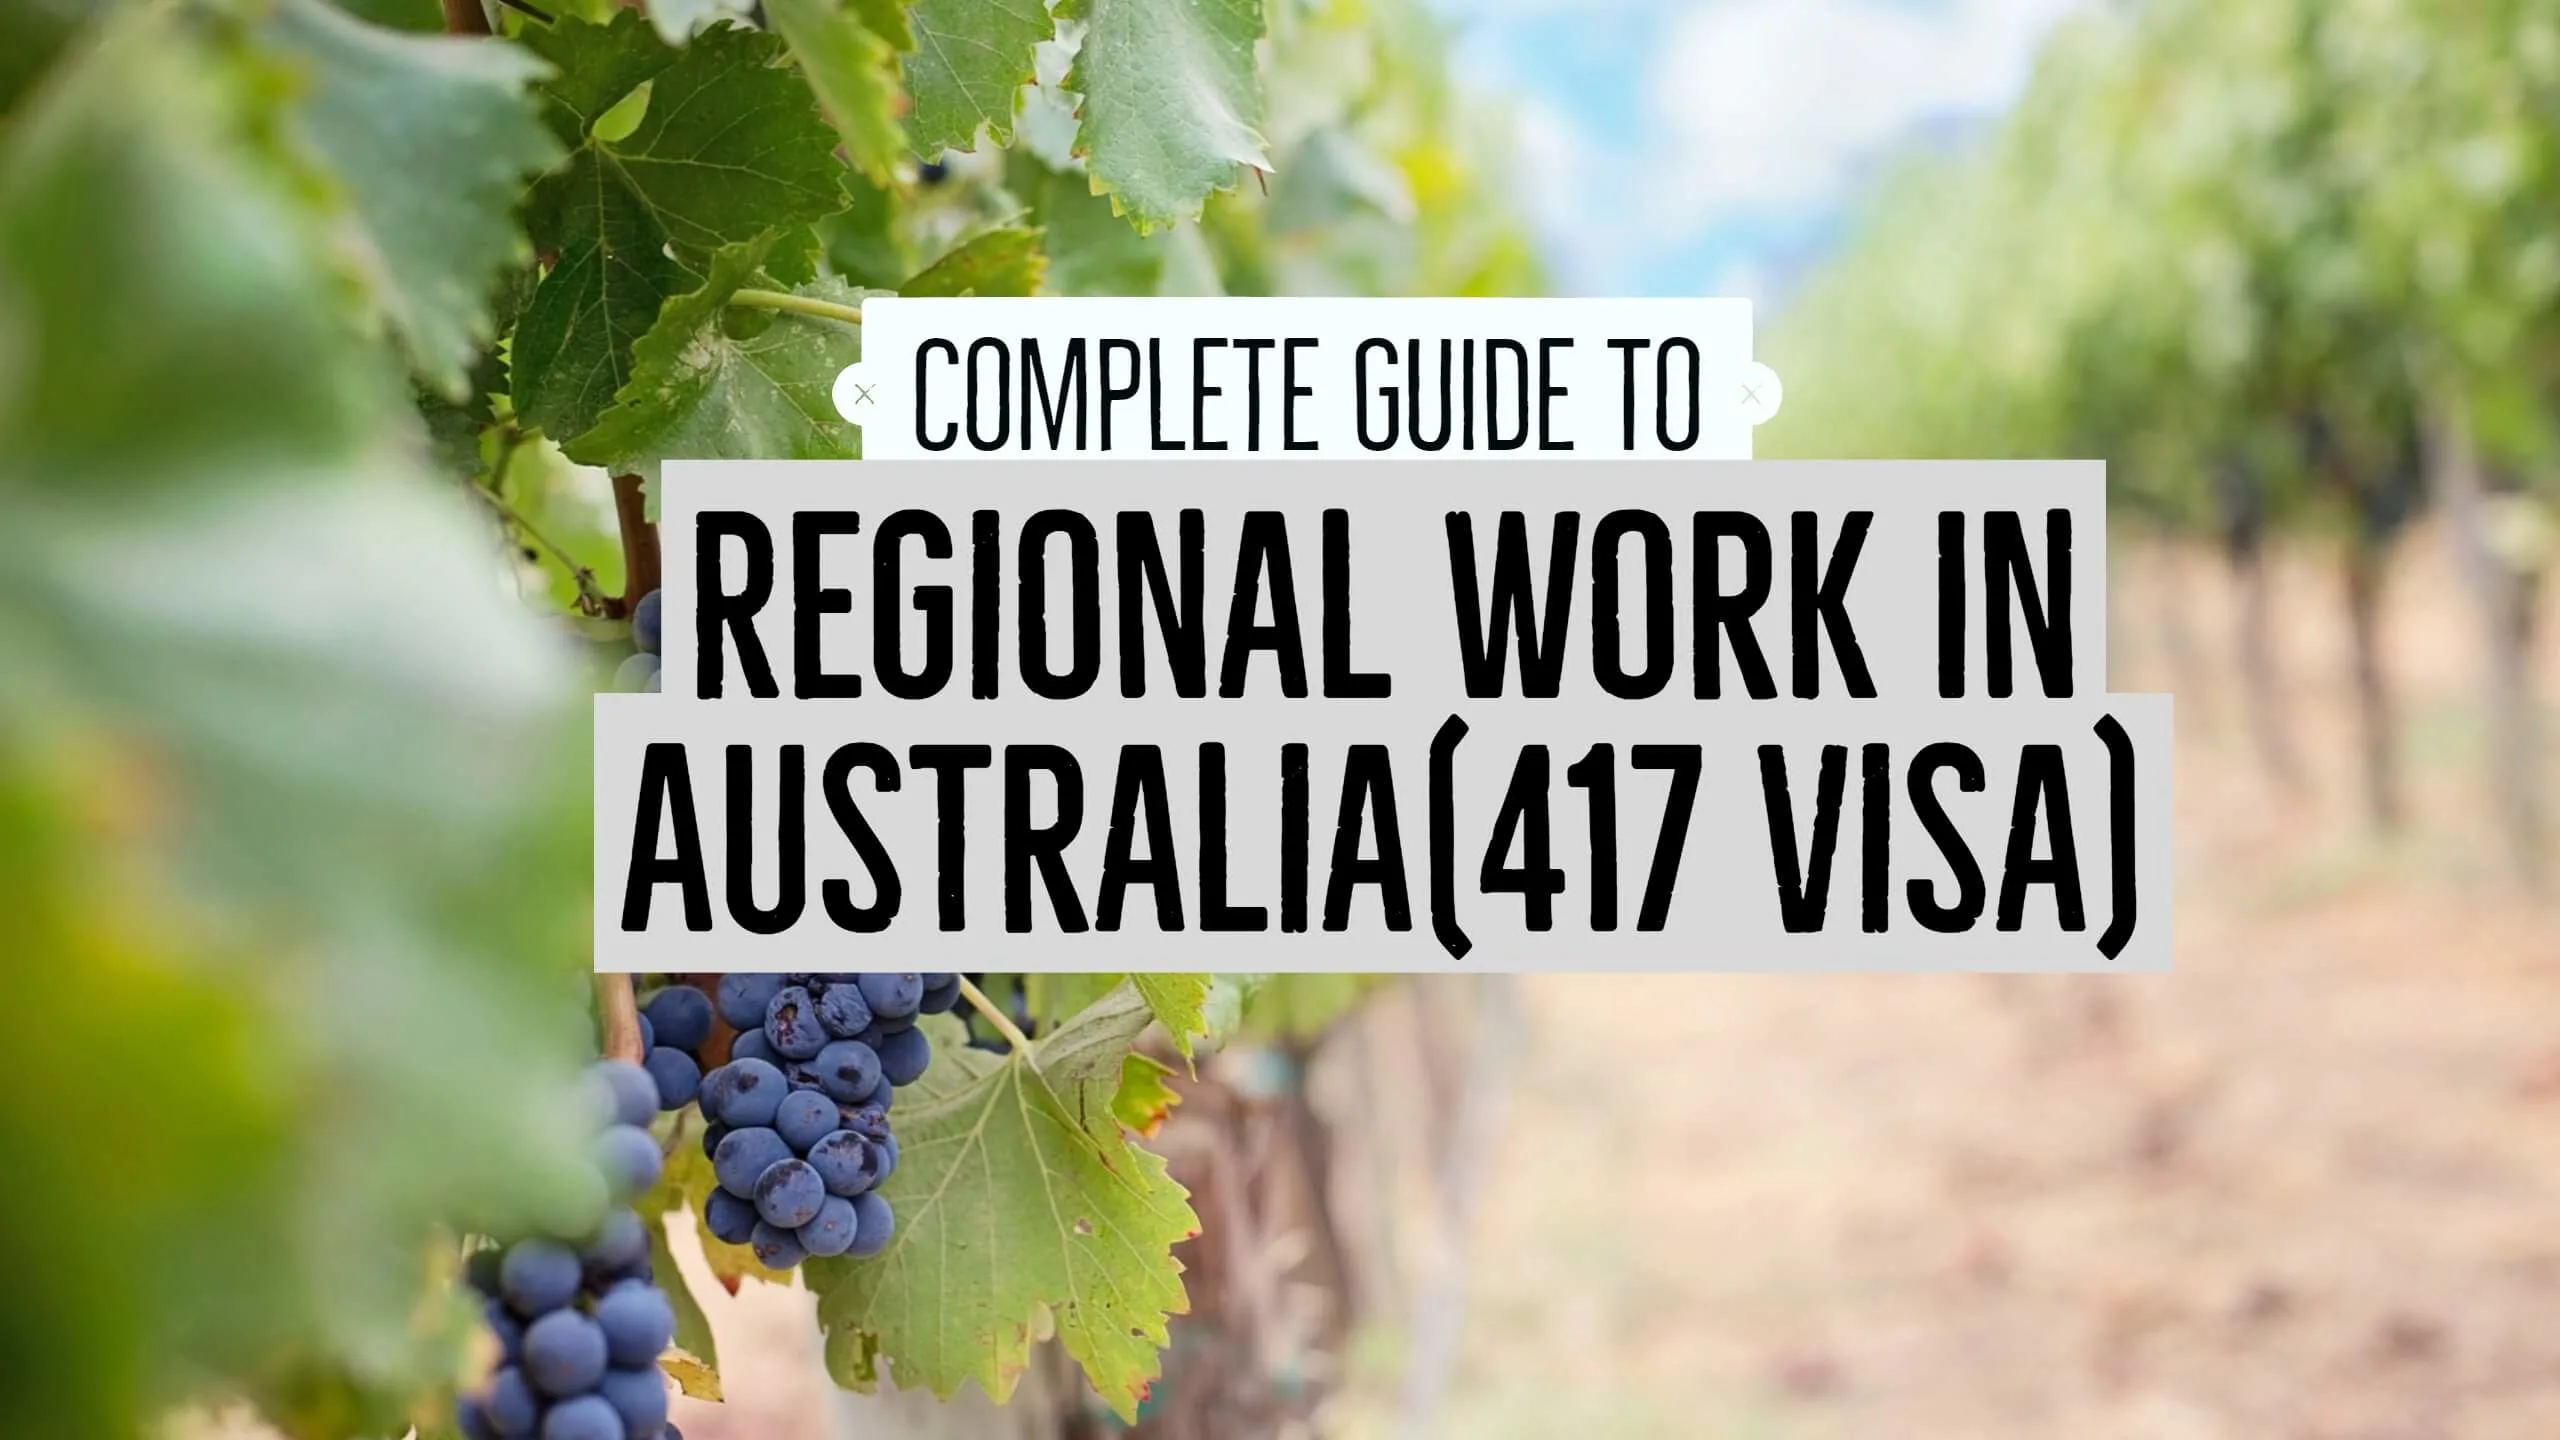 complete guide to regional work in Australia working holiday visa (1)